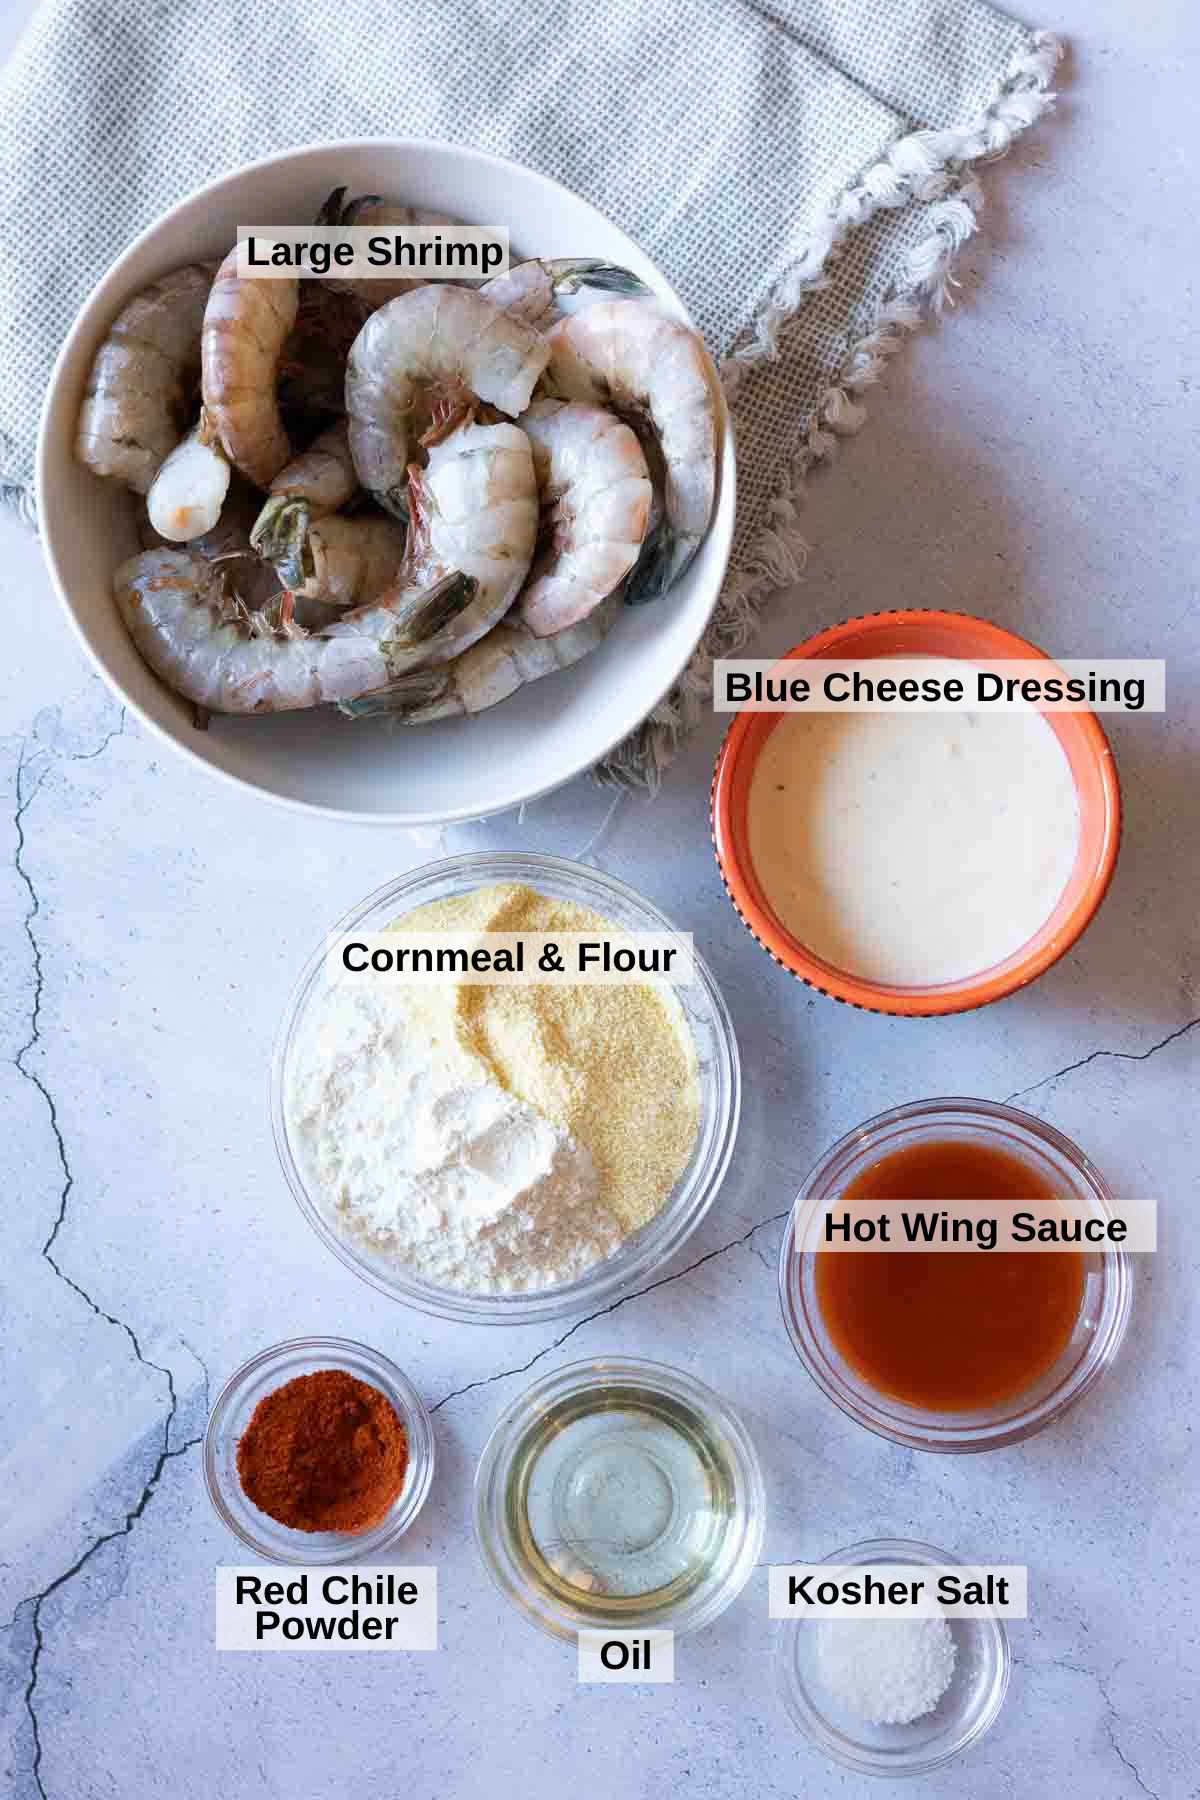 Ingredients to make buffalo shrimp appetizer.